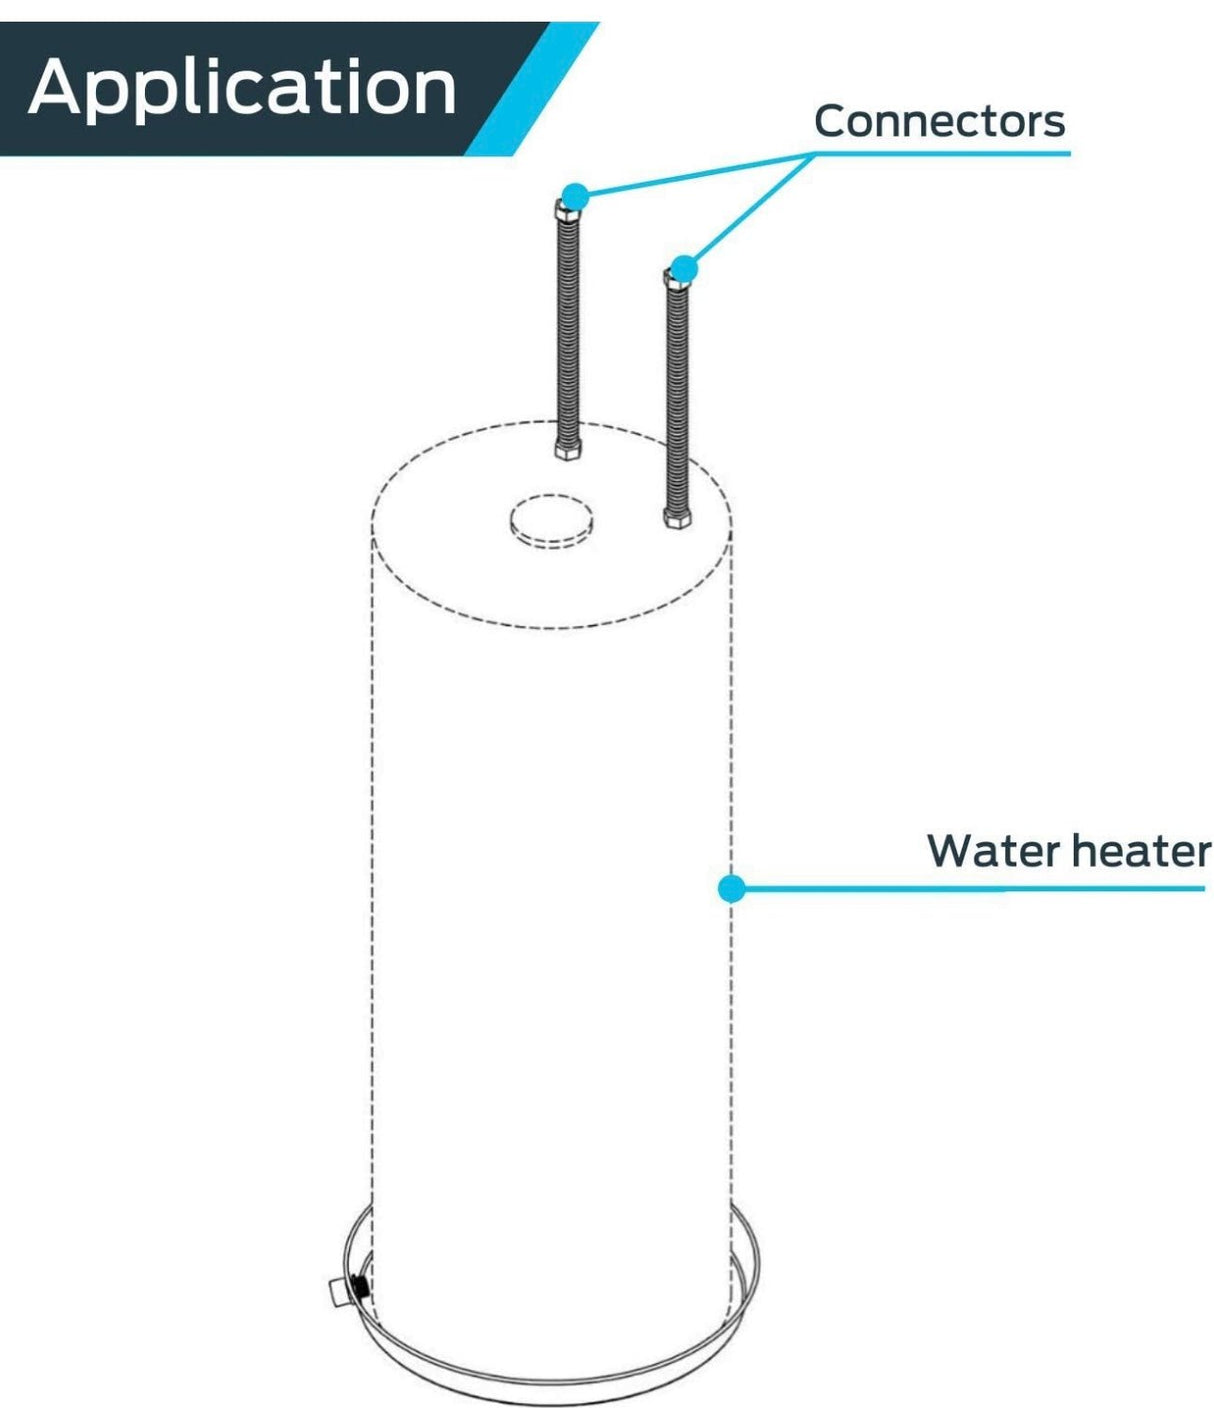 HoldRite QuickFlex 1-1/2 Inch FIP x 1-1/2 Inch FIP x 18 Inch Water Heater Connector